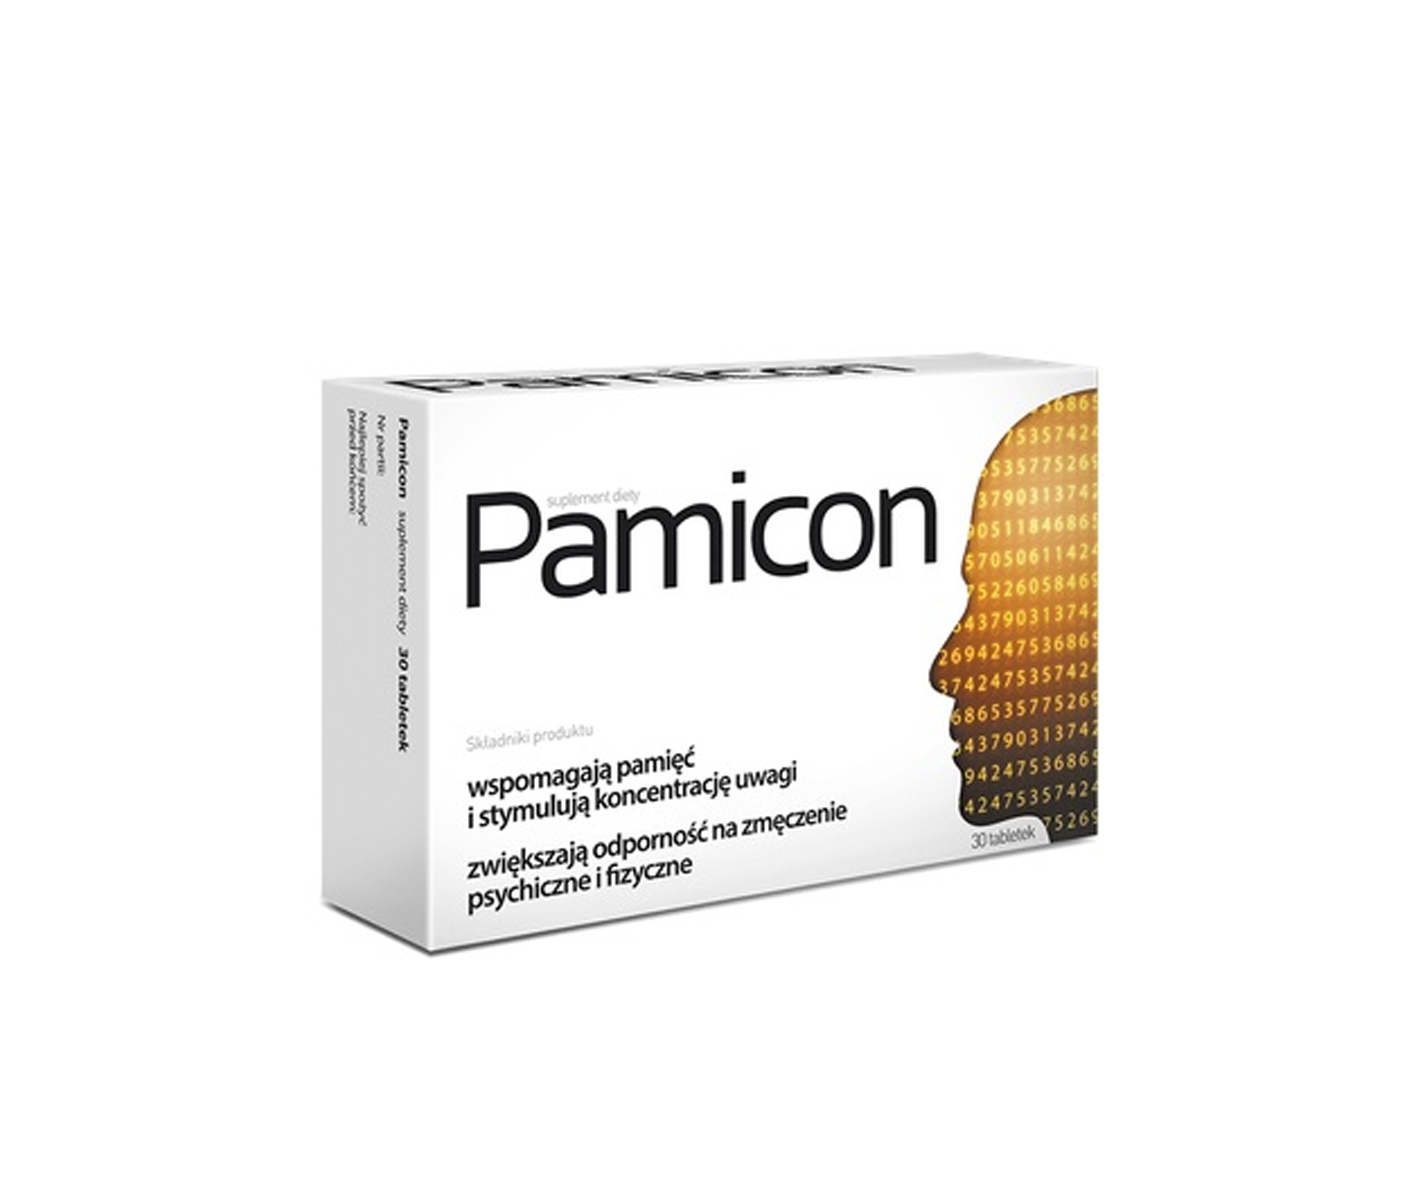 Aflofarm, Pamicon, concentration tablets